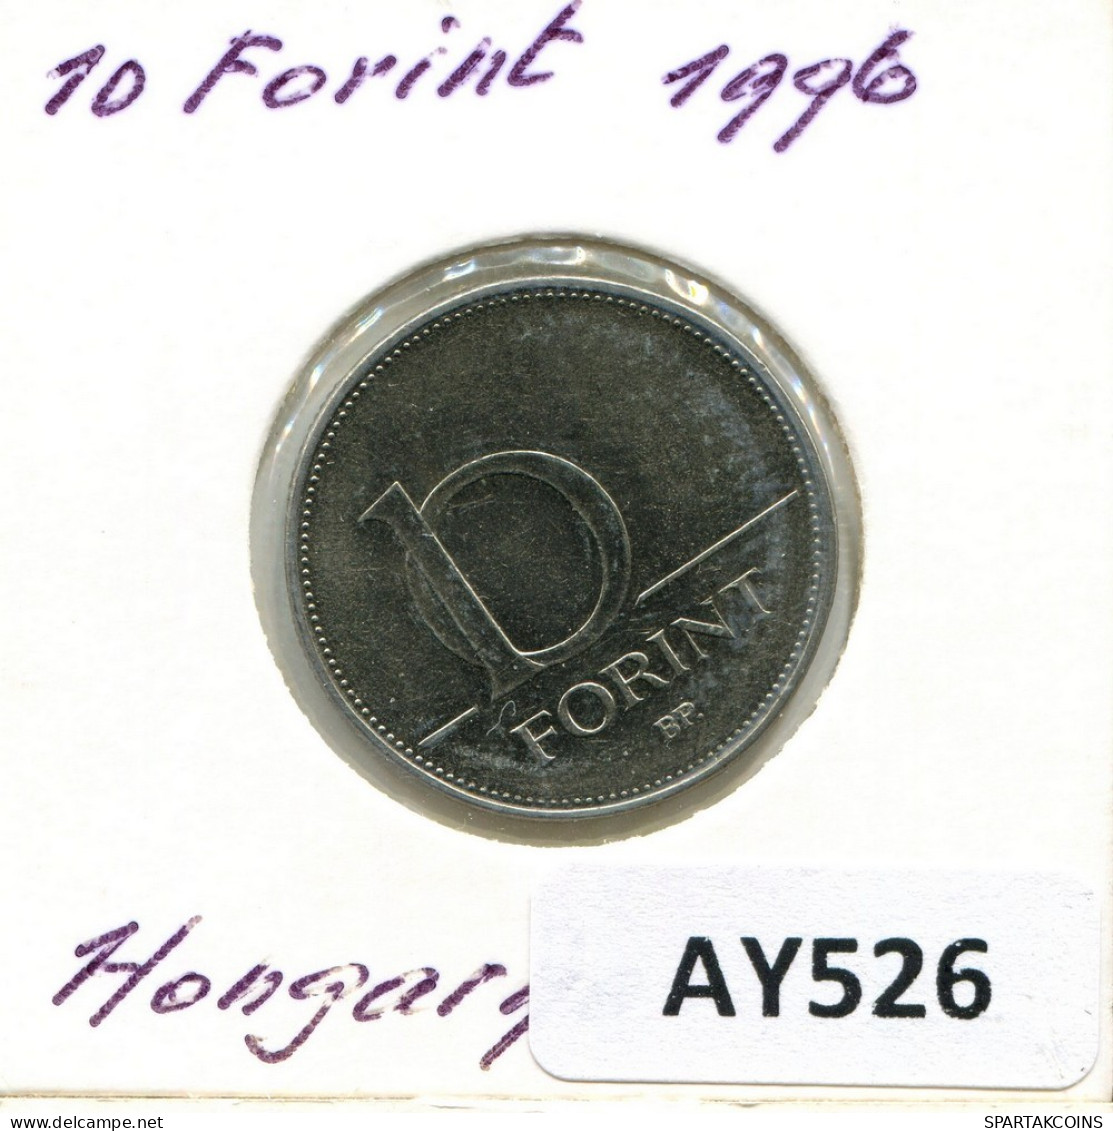 10 FORINT 1996 HUNGRÍA HUNGARY Moneda #AY526.E.A - Hungary